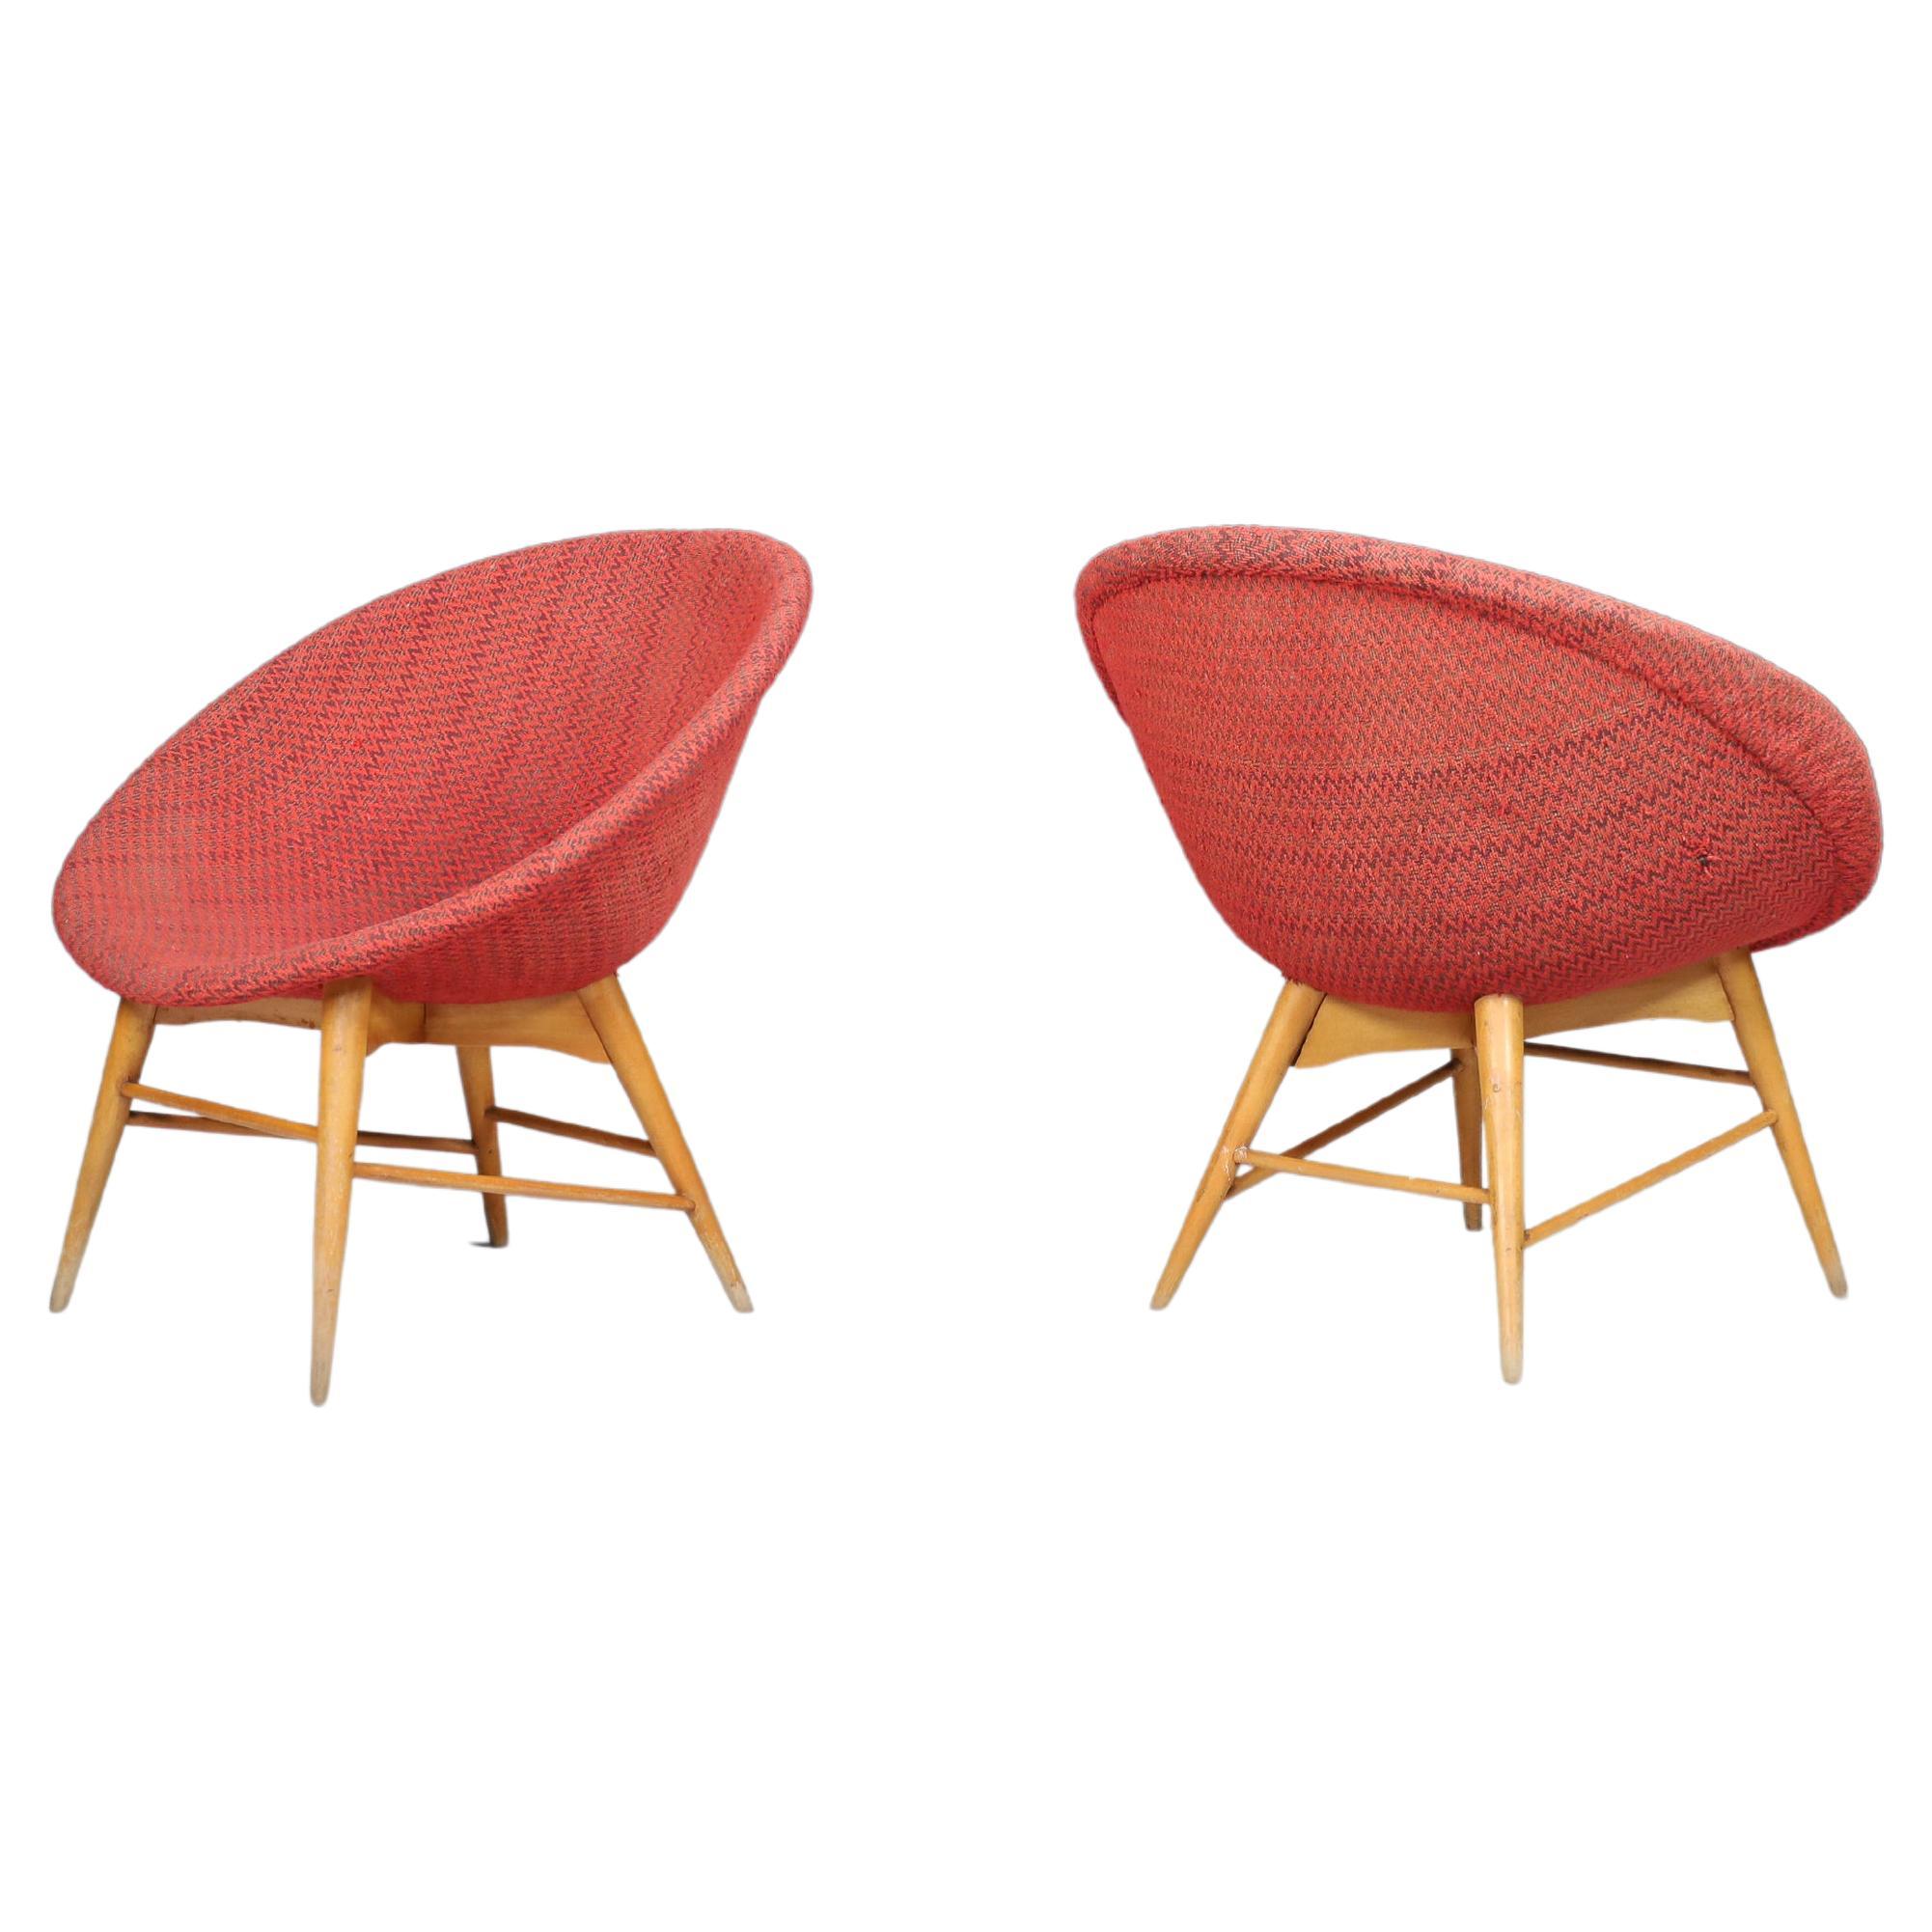 Miroslav Navratil Basket Chairs in Original Red Fabric, 1960 For Sale